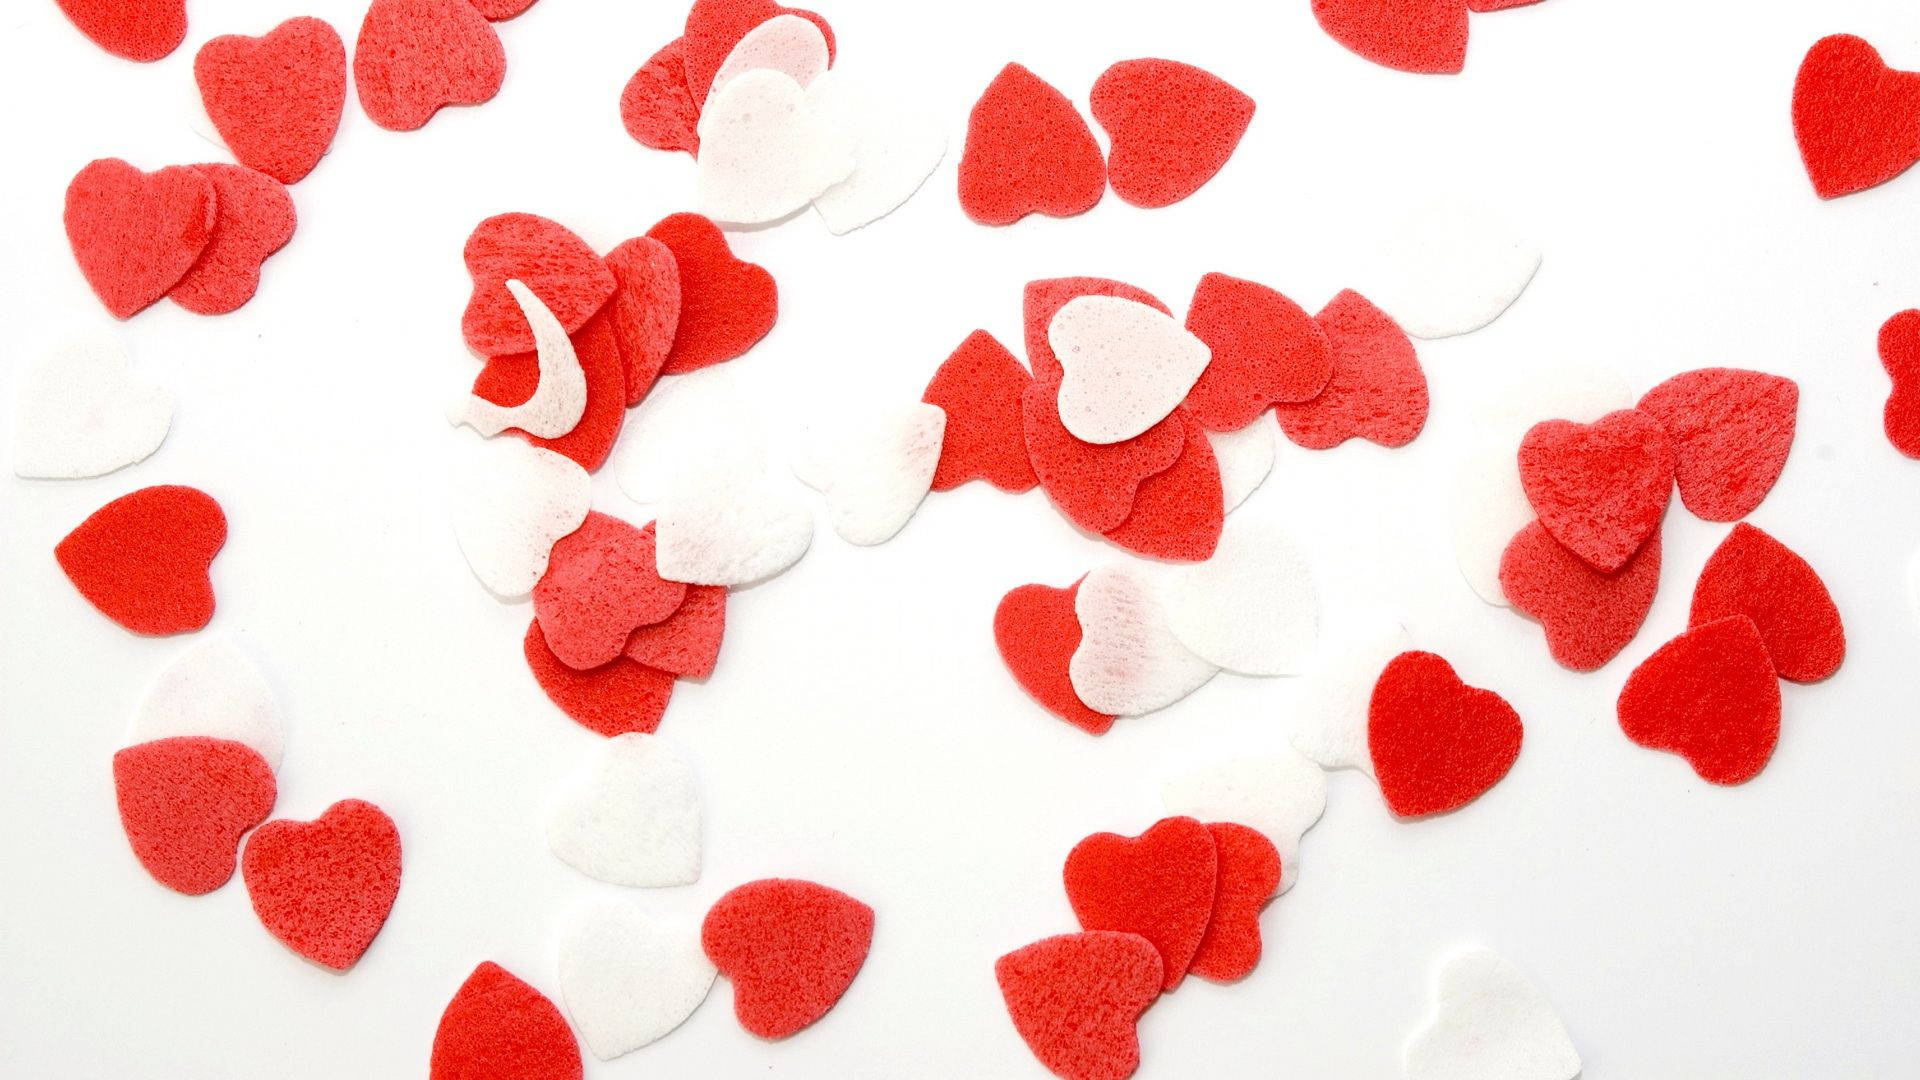 Paper Cutouts Of Valentine's Hearts Desktop Wallpaper